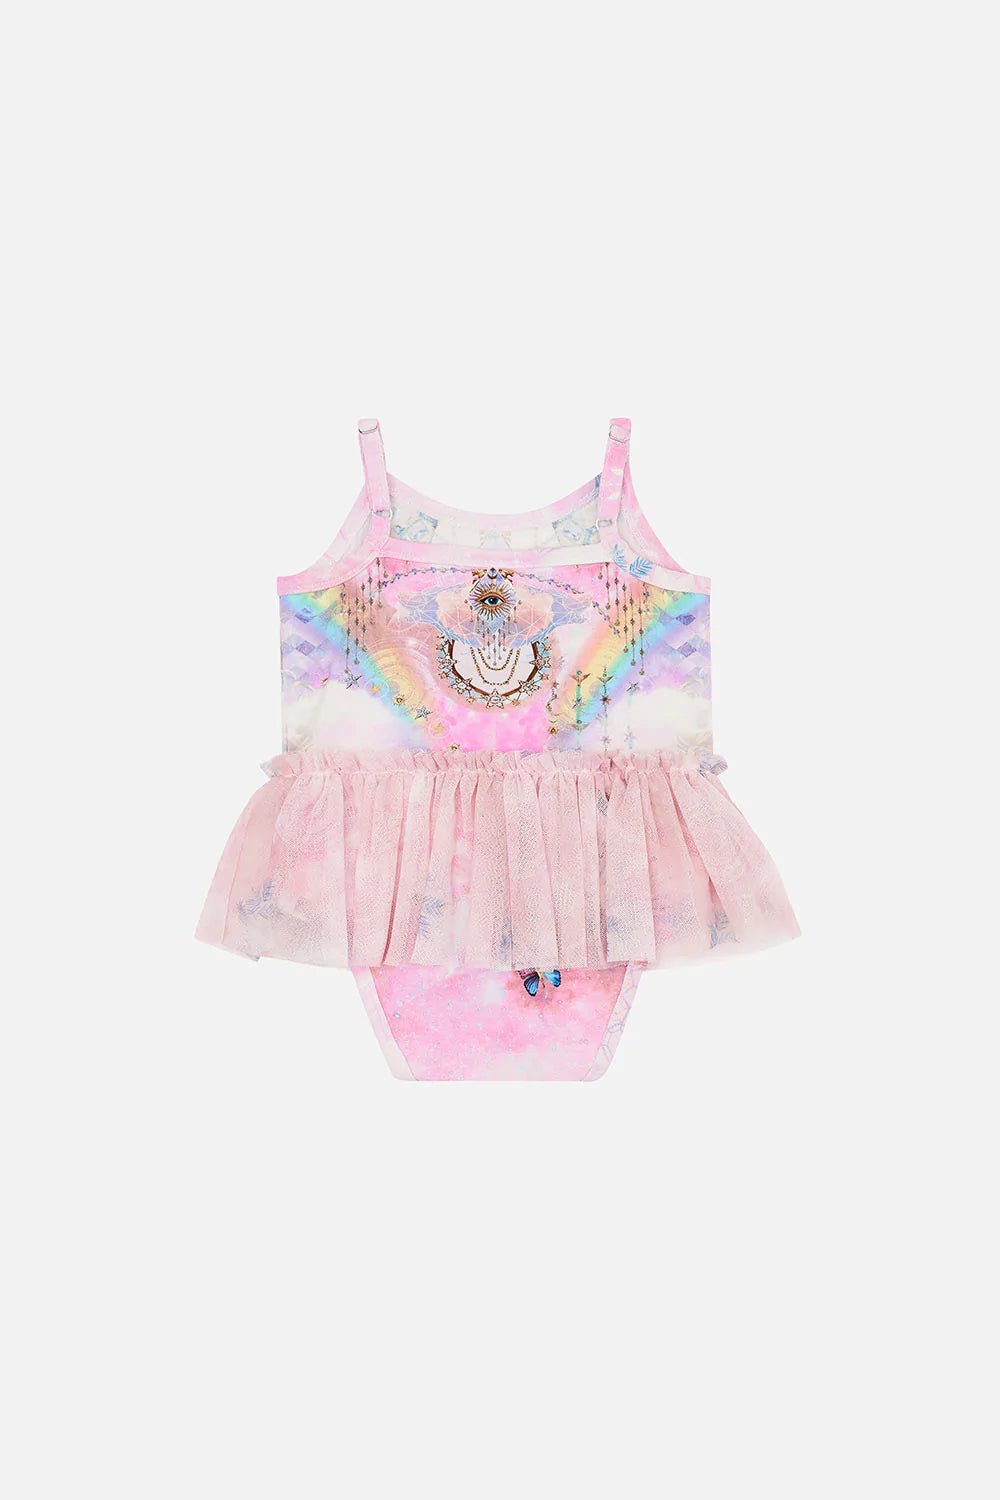 CAMILLA - Babies Tutu Onesie Wings Of Pegasus - Pinkhill, Darwin boutique, Australian high end fashion, Darwin Fashion